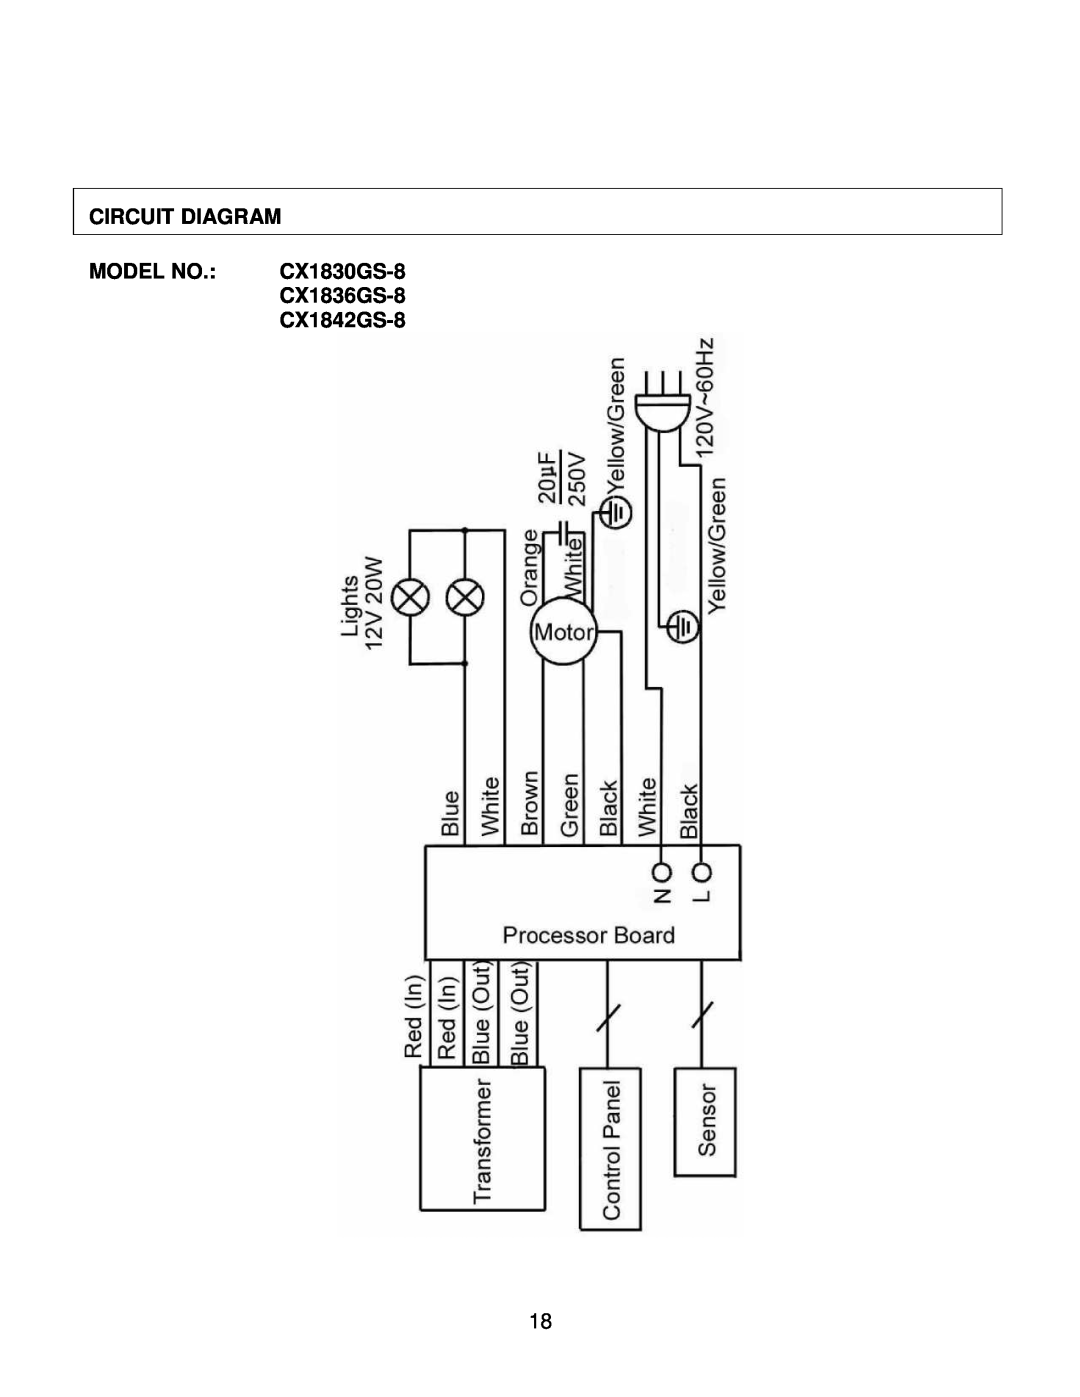 Kobe Range Hoods CX1830GS-8 installation instructions Circuit Diagram, Model No, CX1836GS-8, CX1842GS-8 